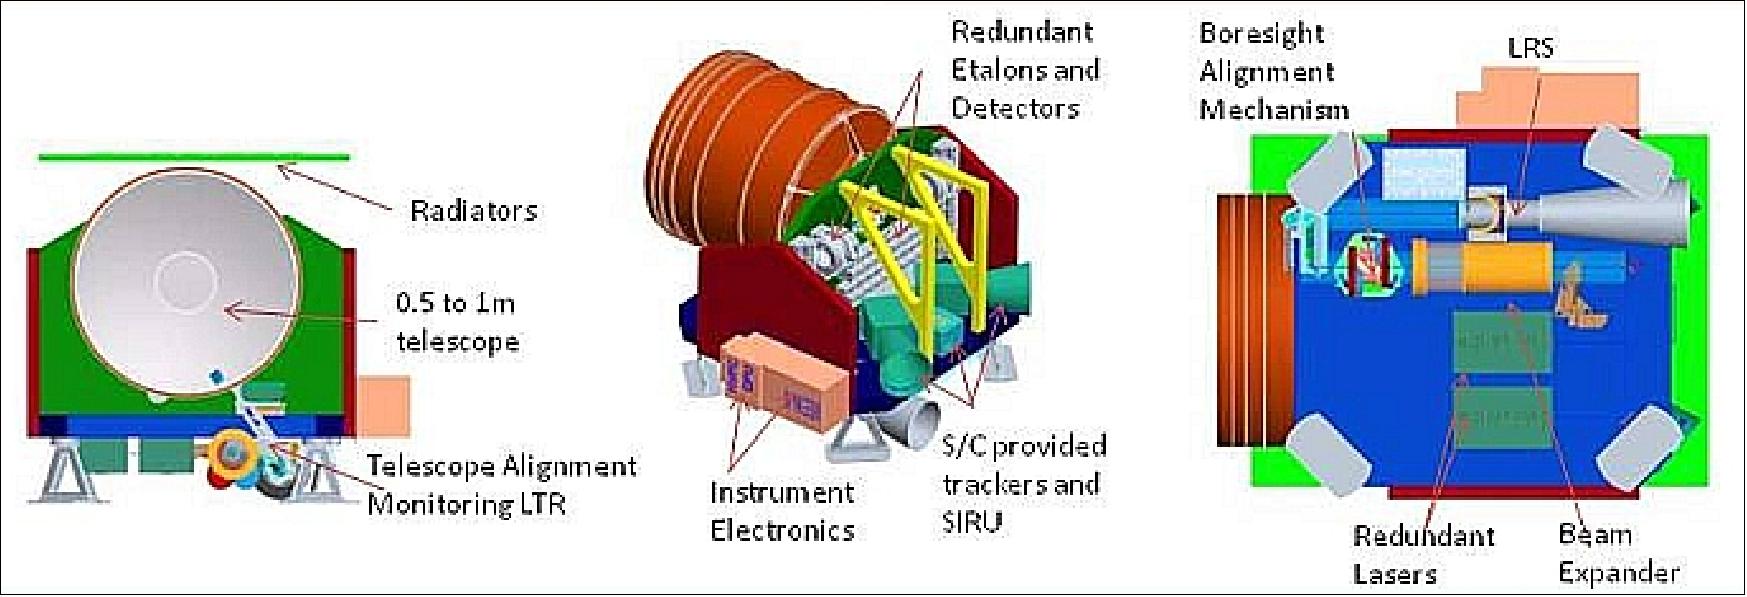 Figure 58: Schematic of the ATLAS instrument (image credit: NASA)